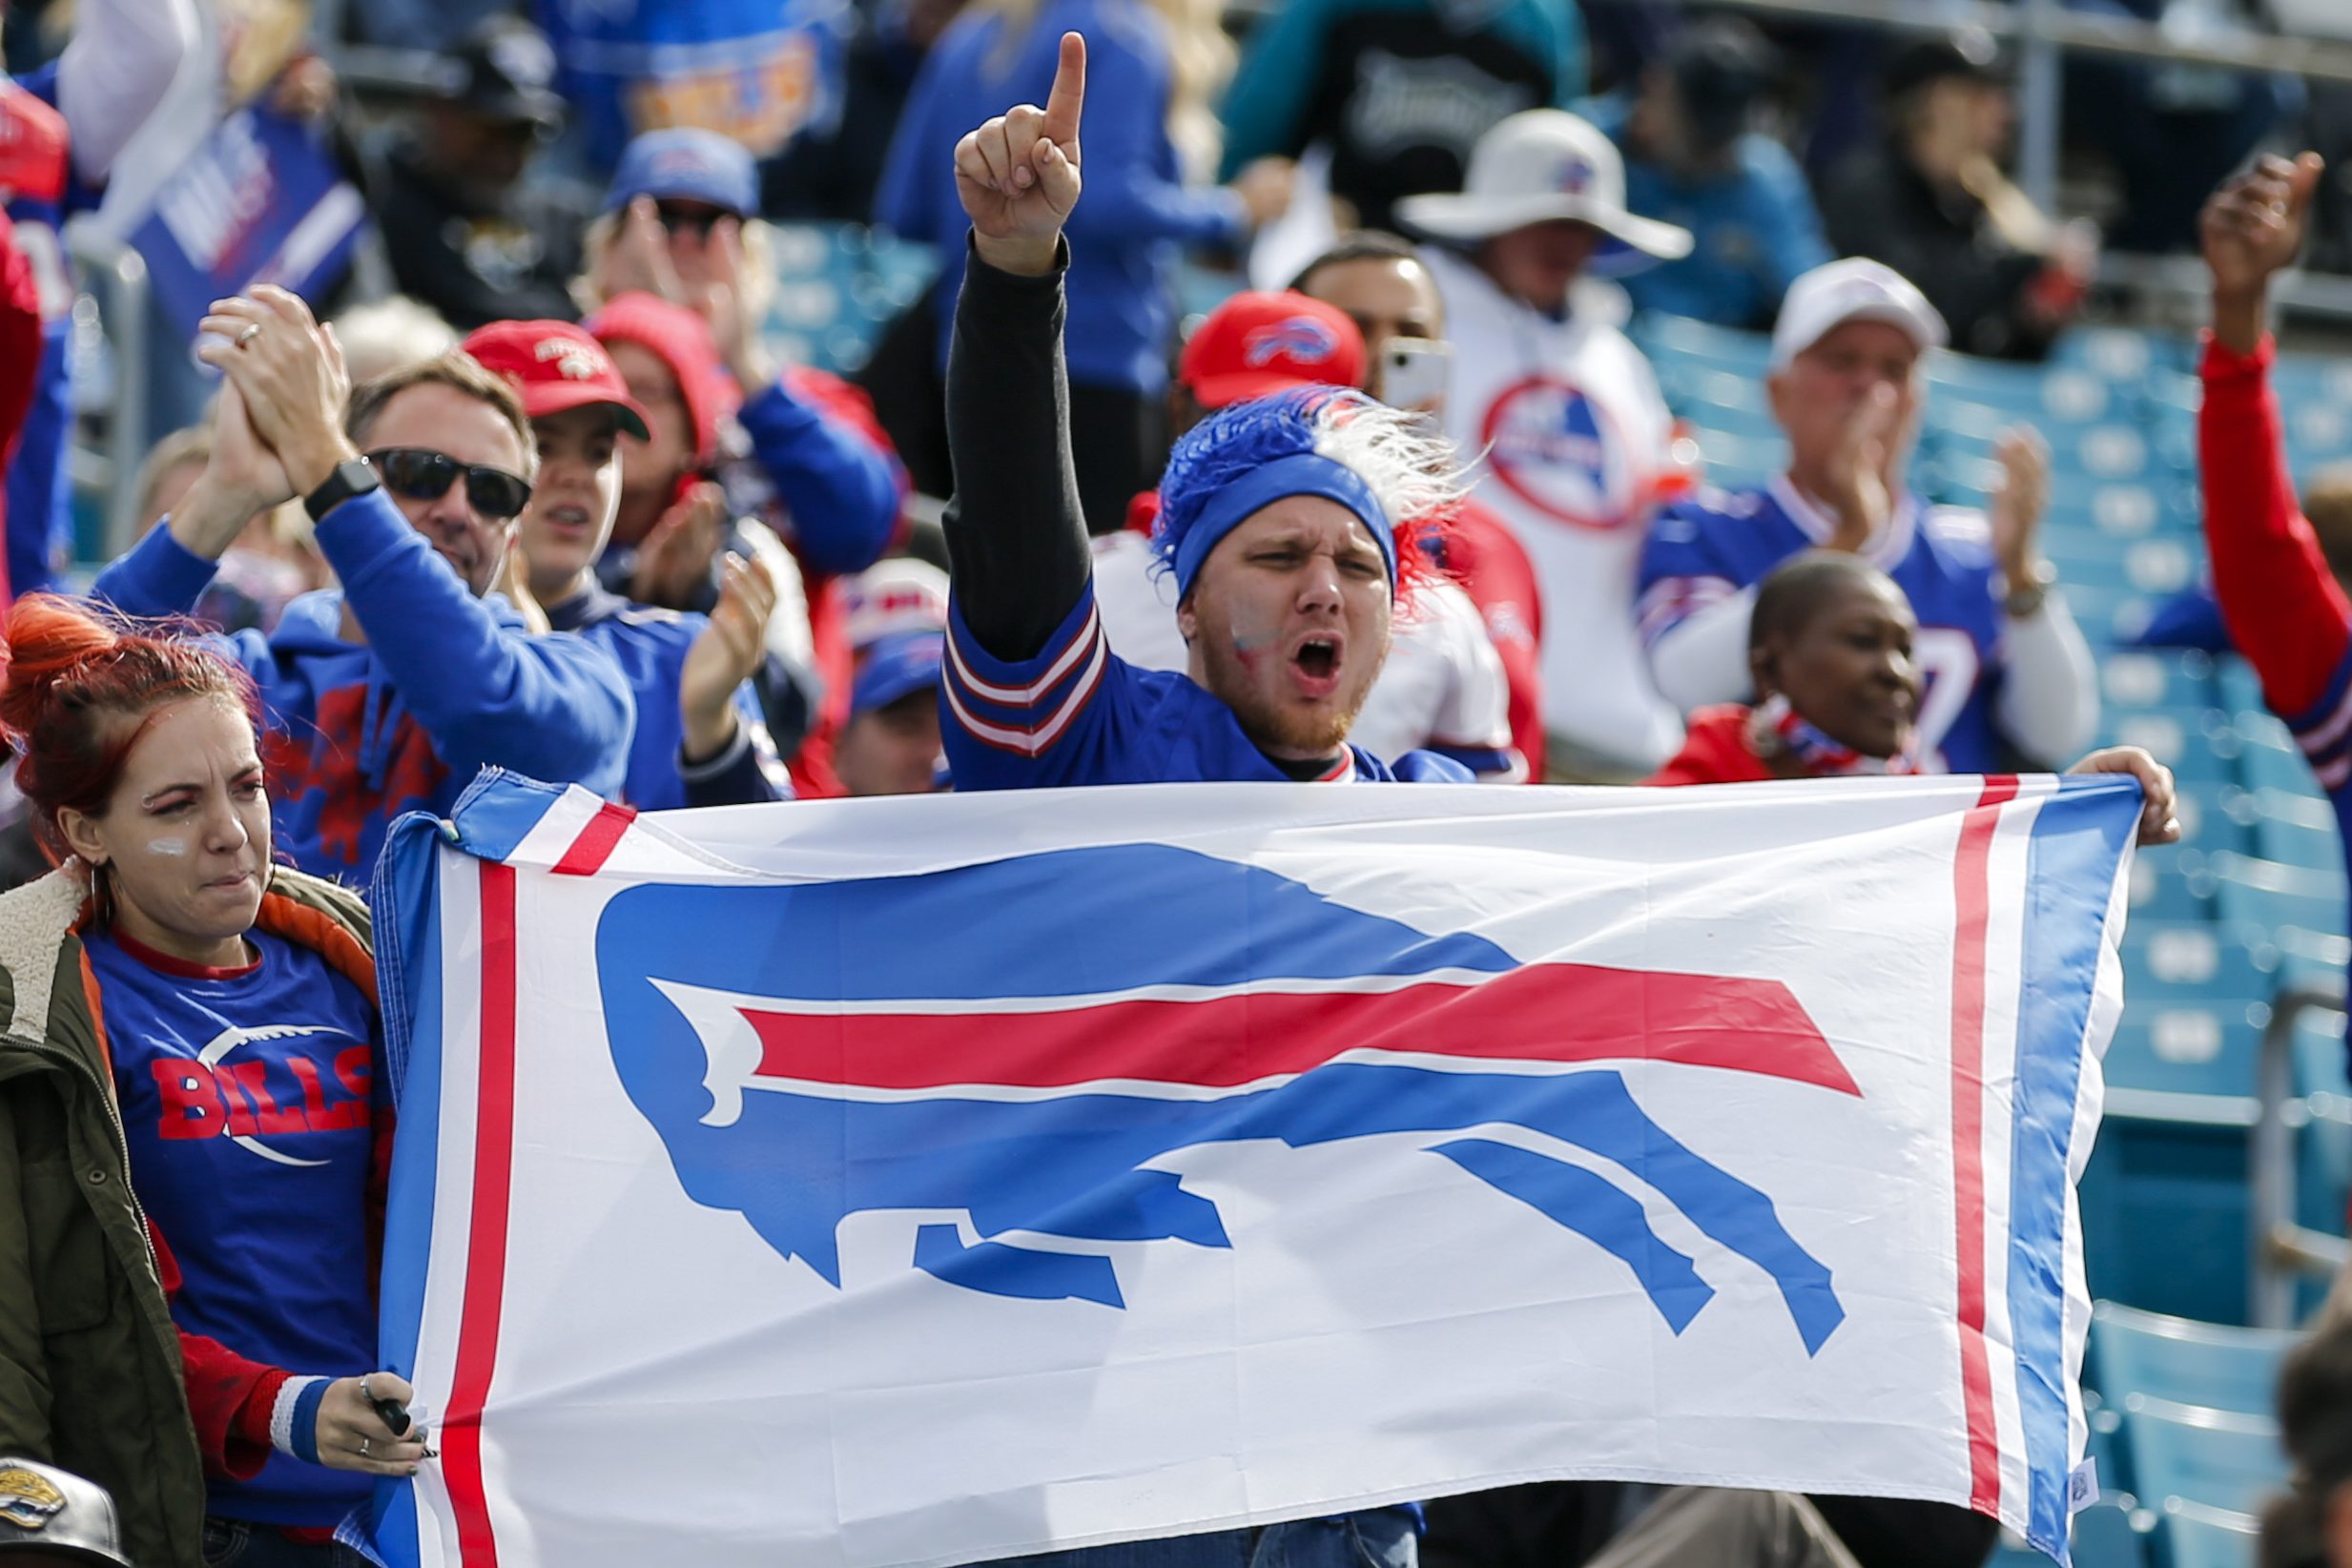 Bills fans watch a game between Buffalo Bills and the Jacksonville Jaguars